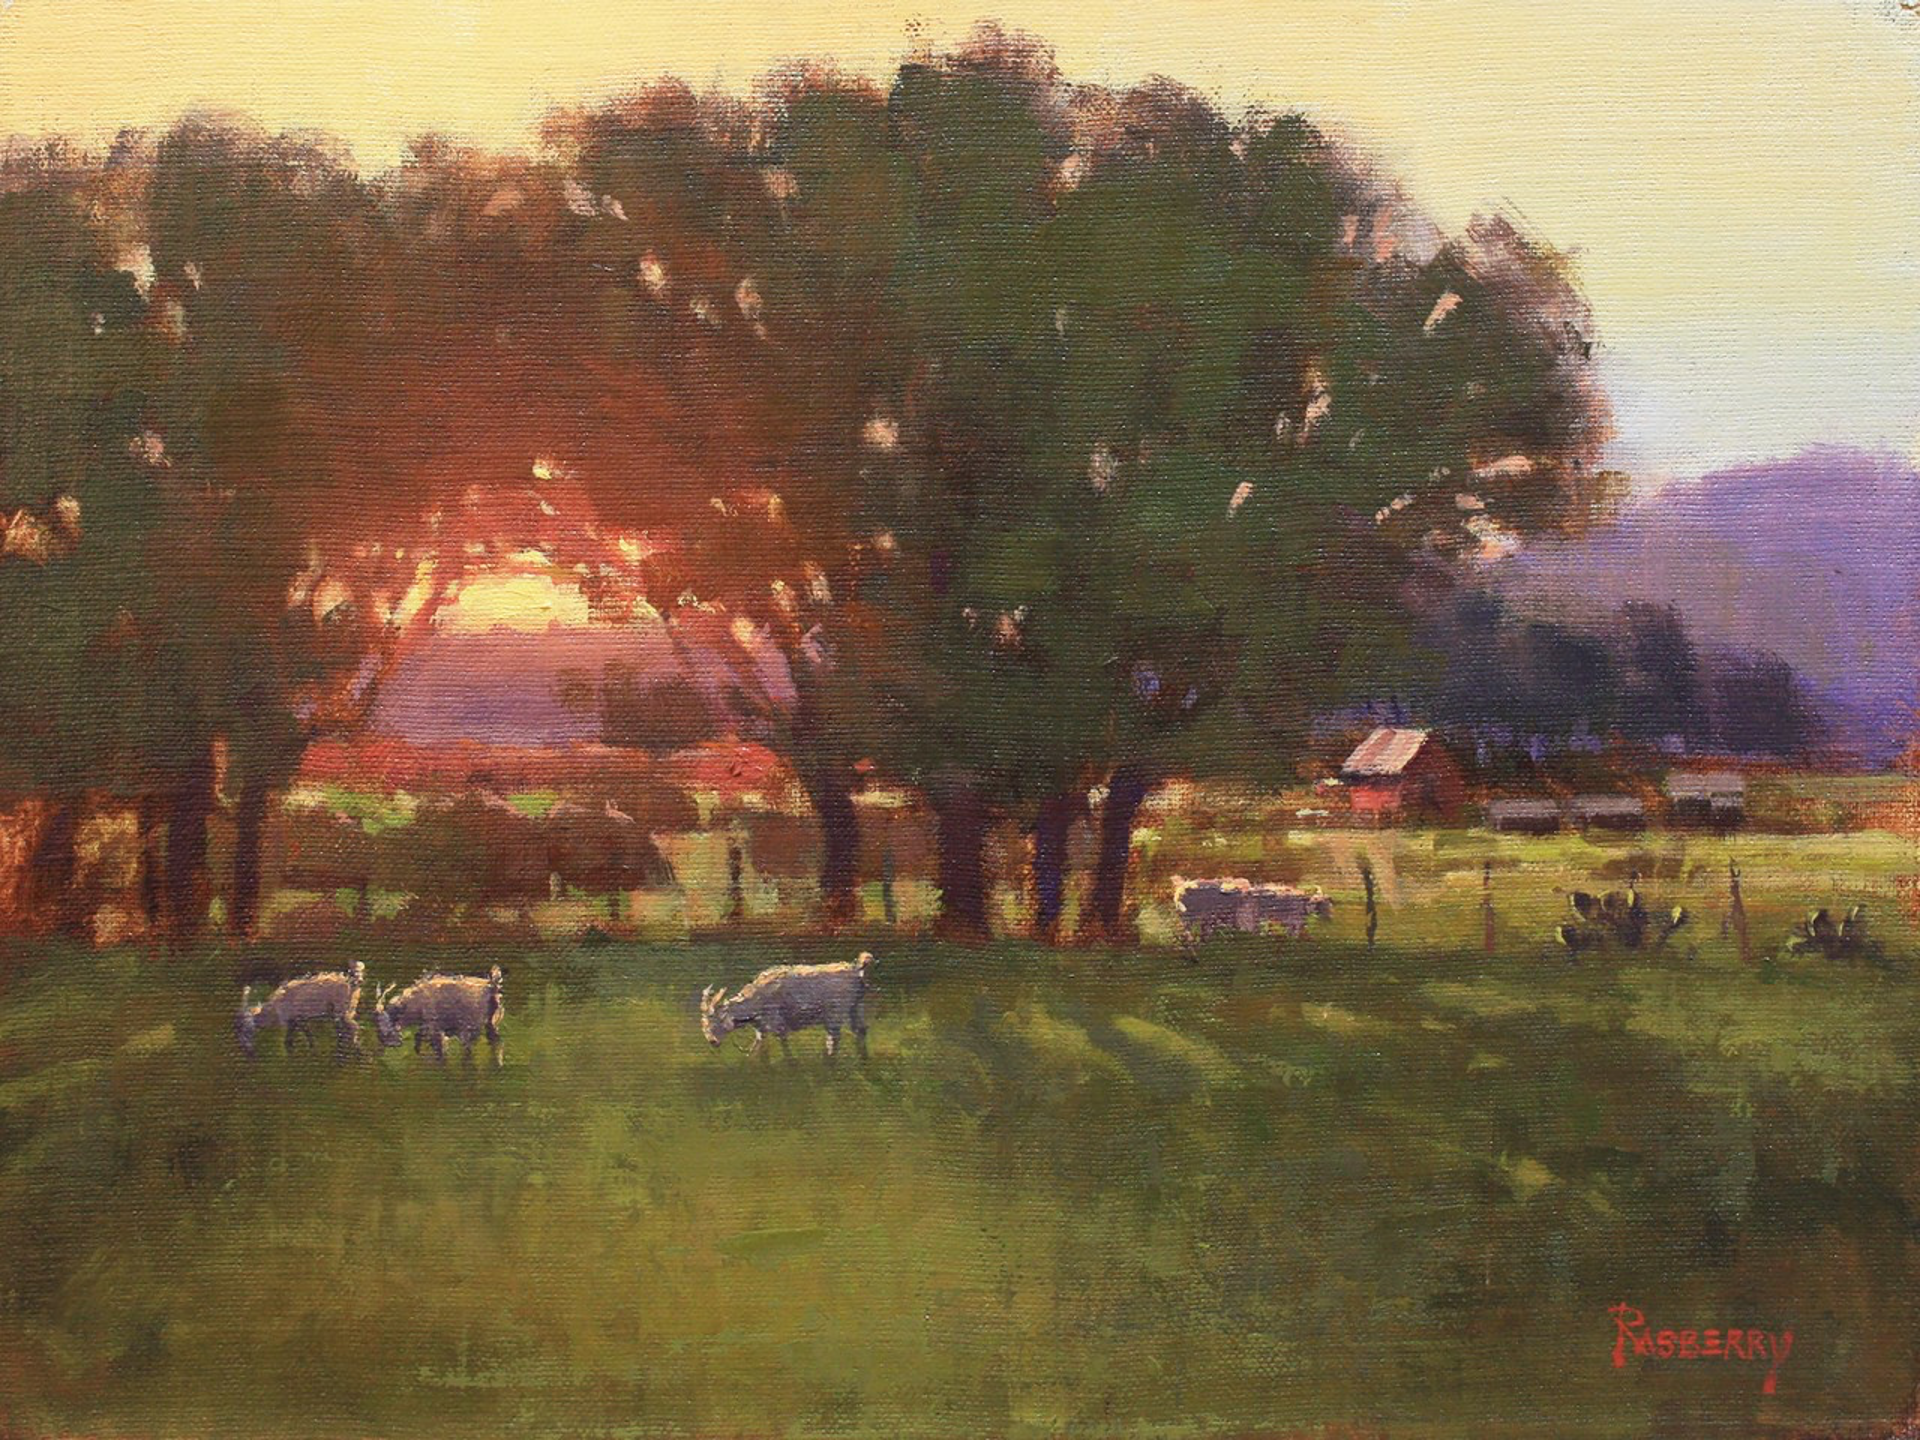 Hill Country Sunrise by John Rasberry